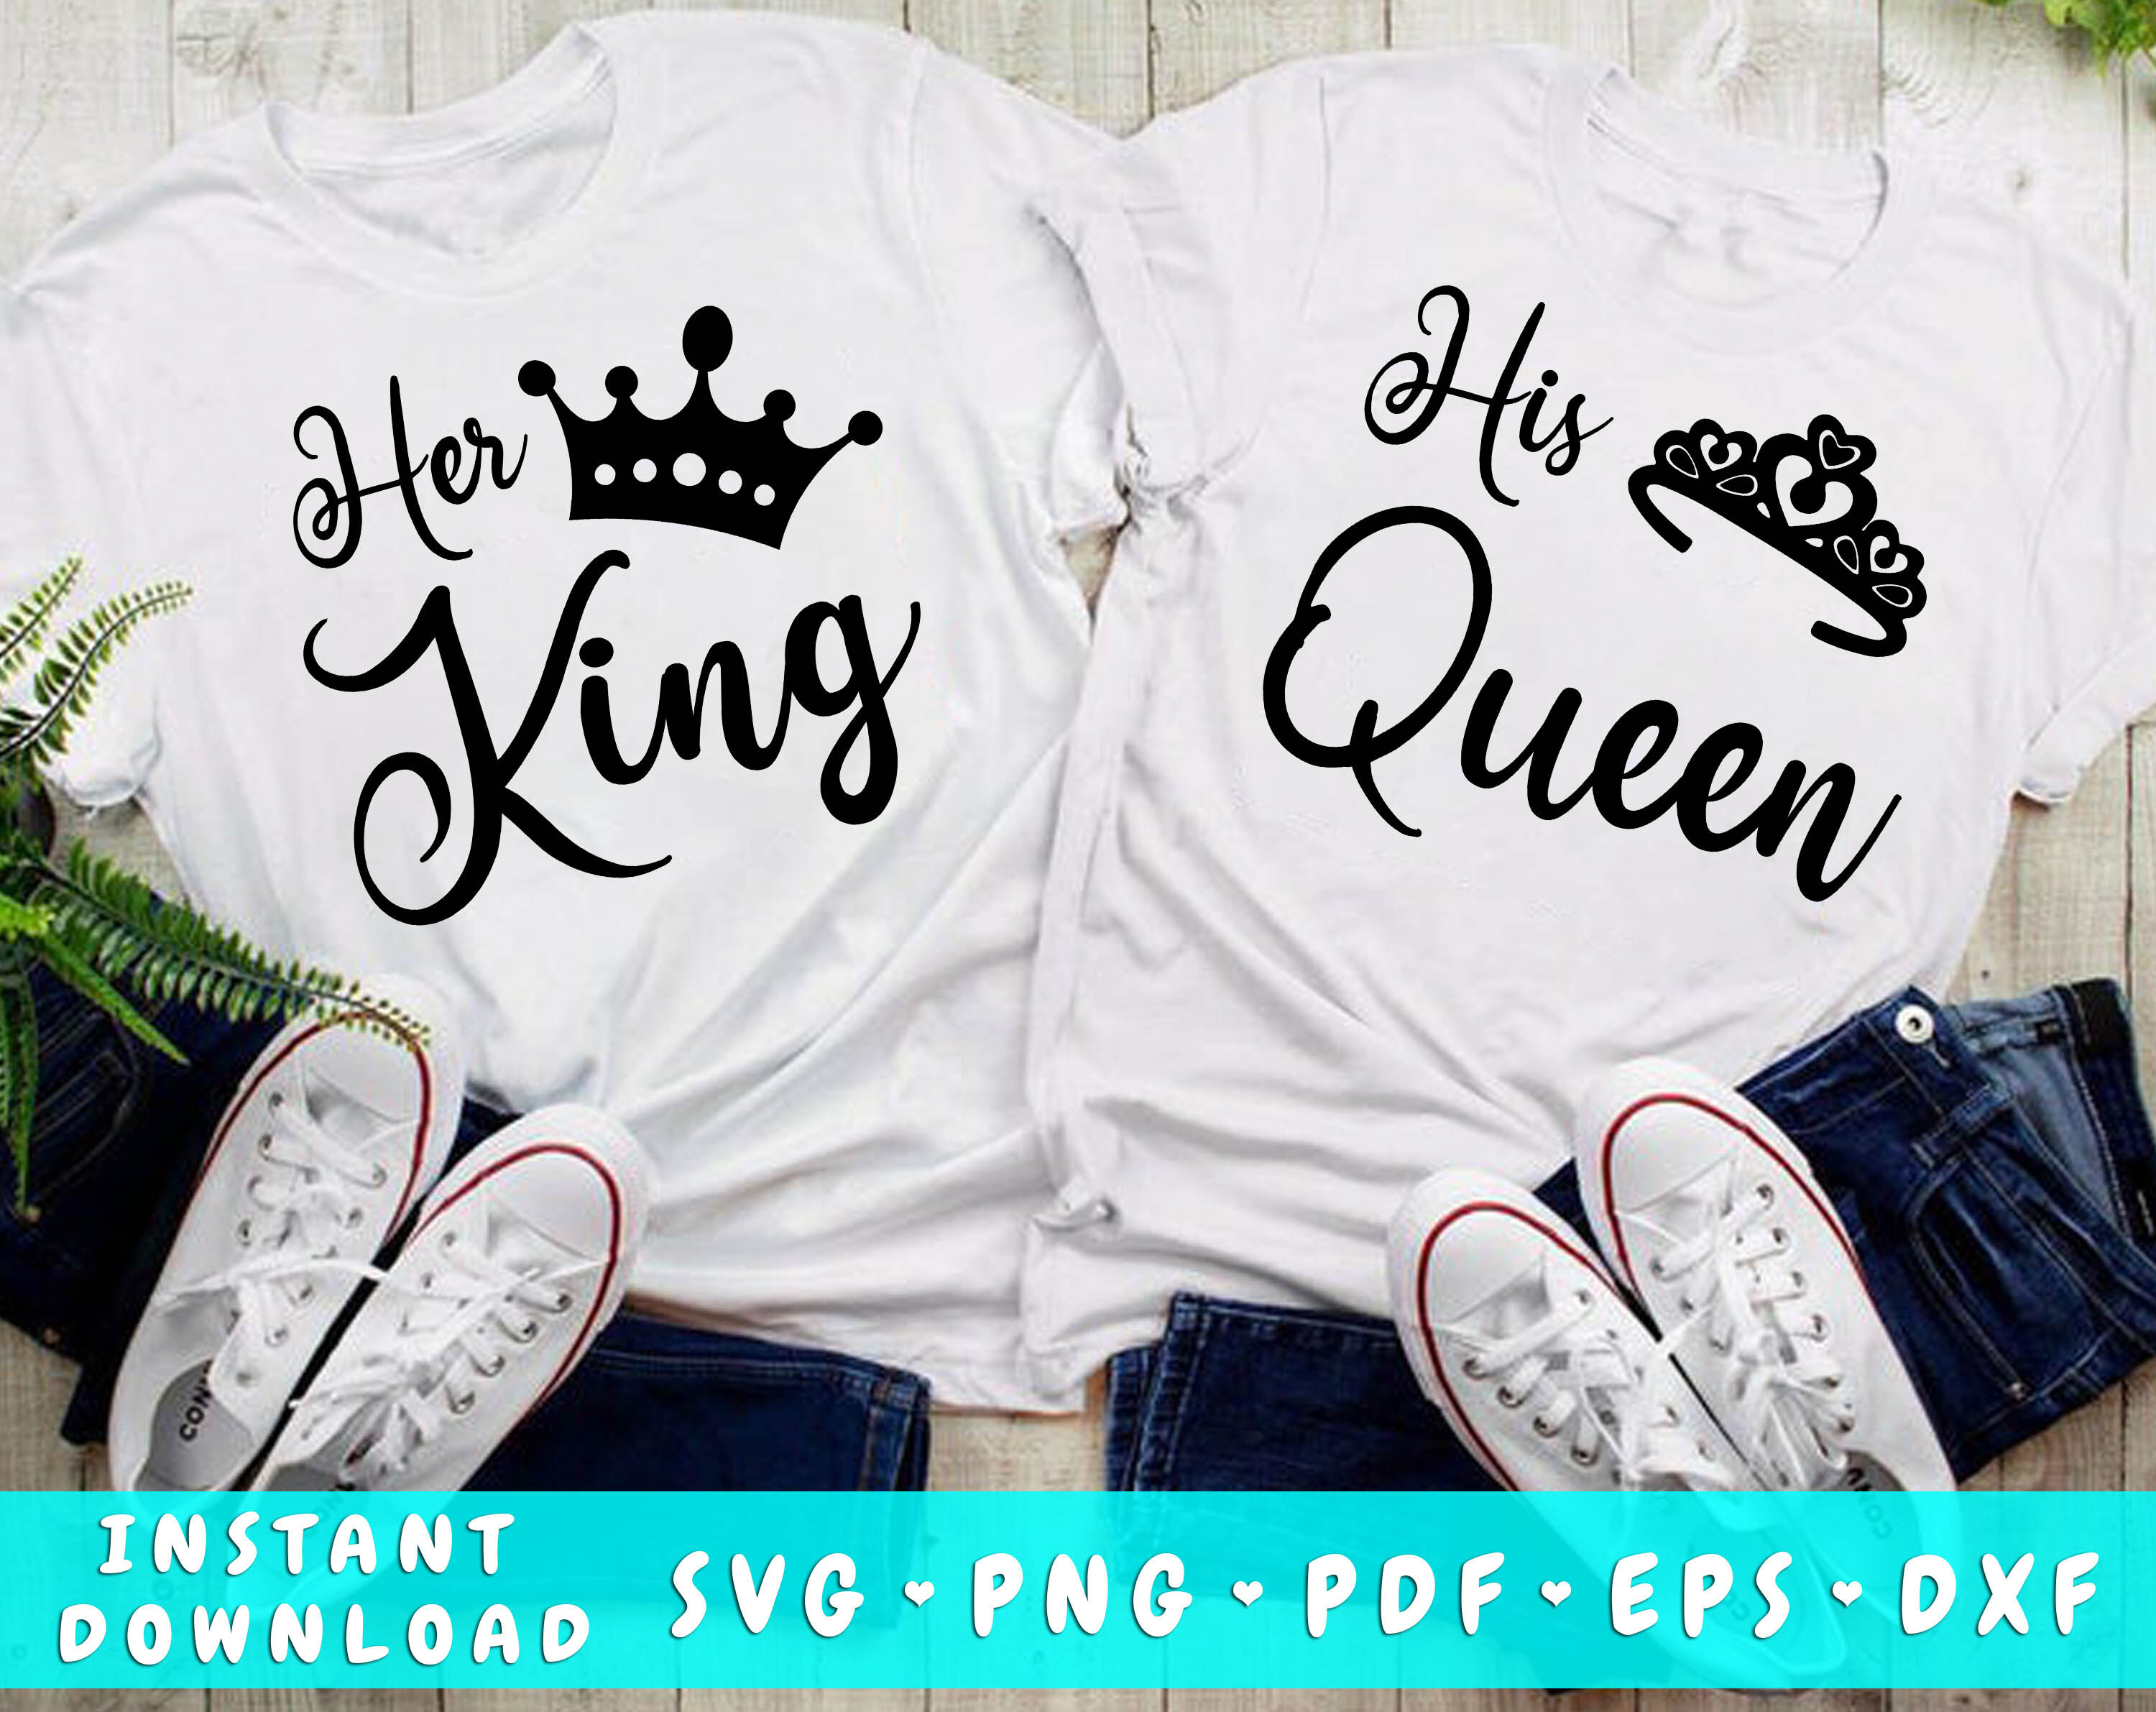 Premium Vector  T-shirt design king and queen. couple design t